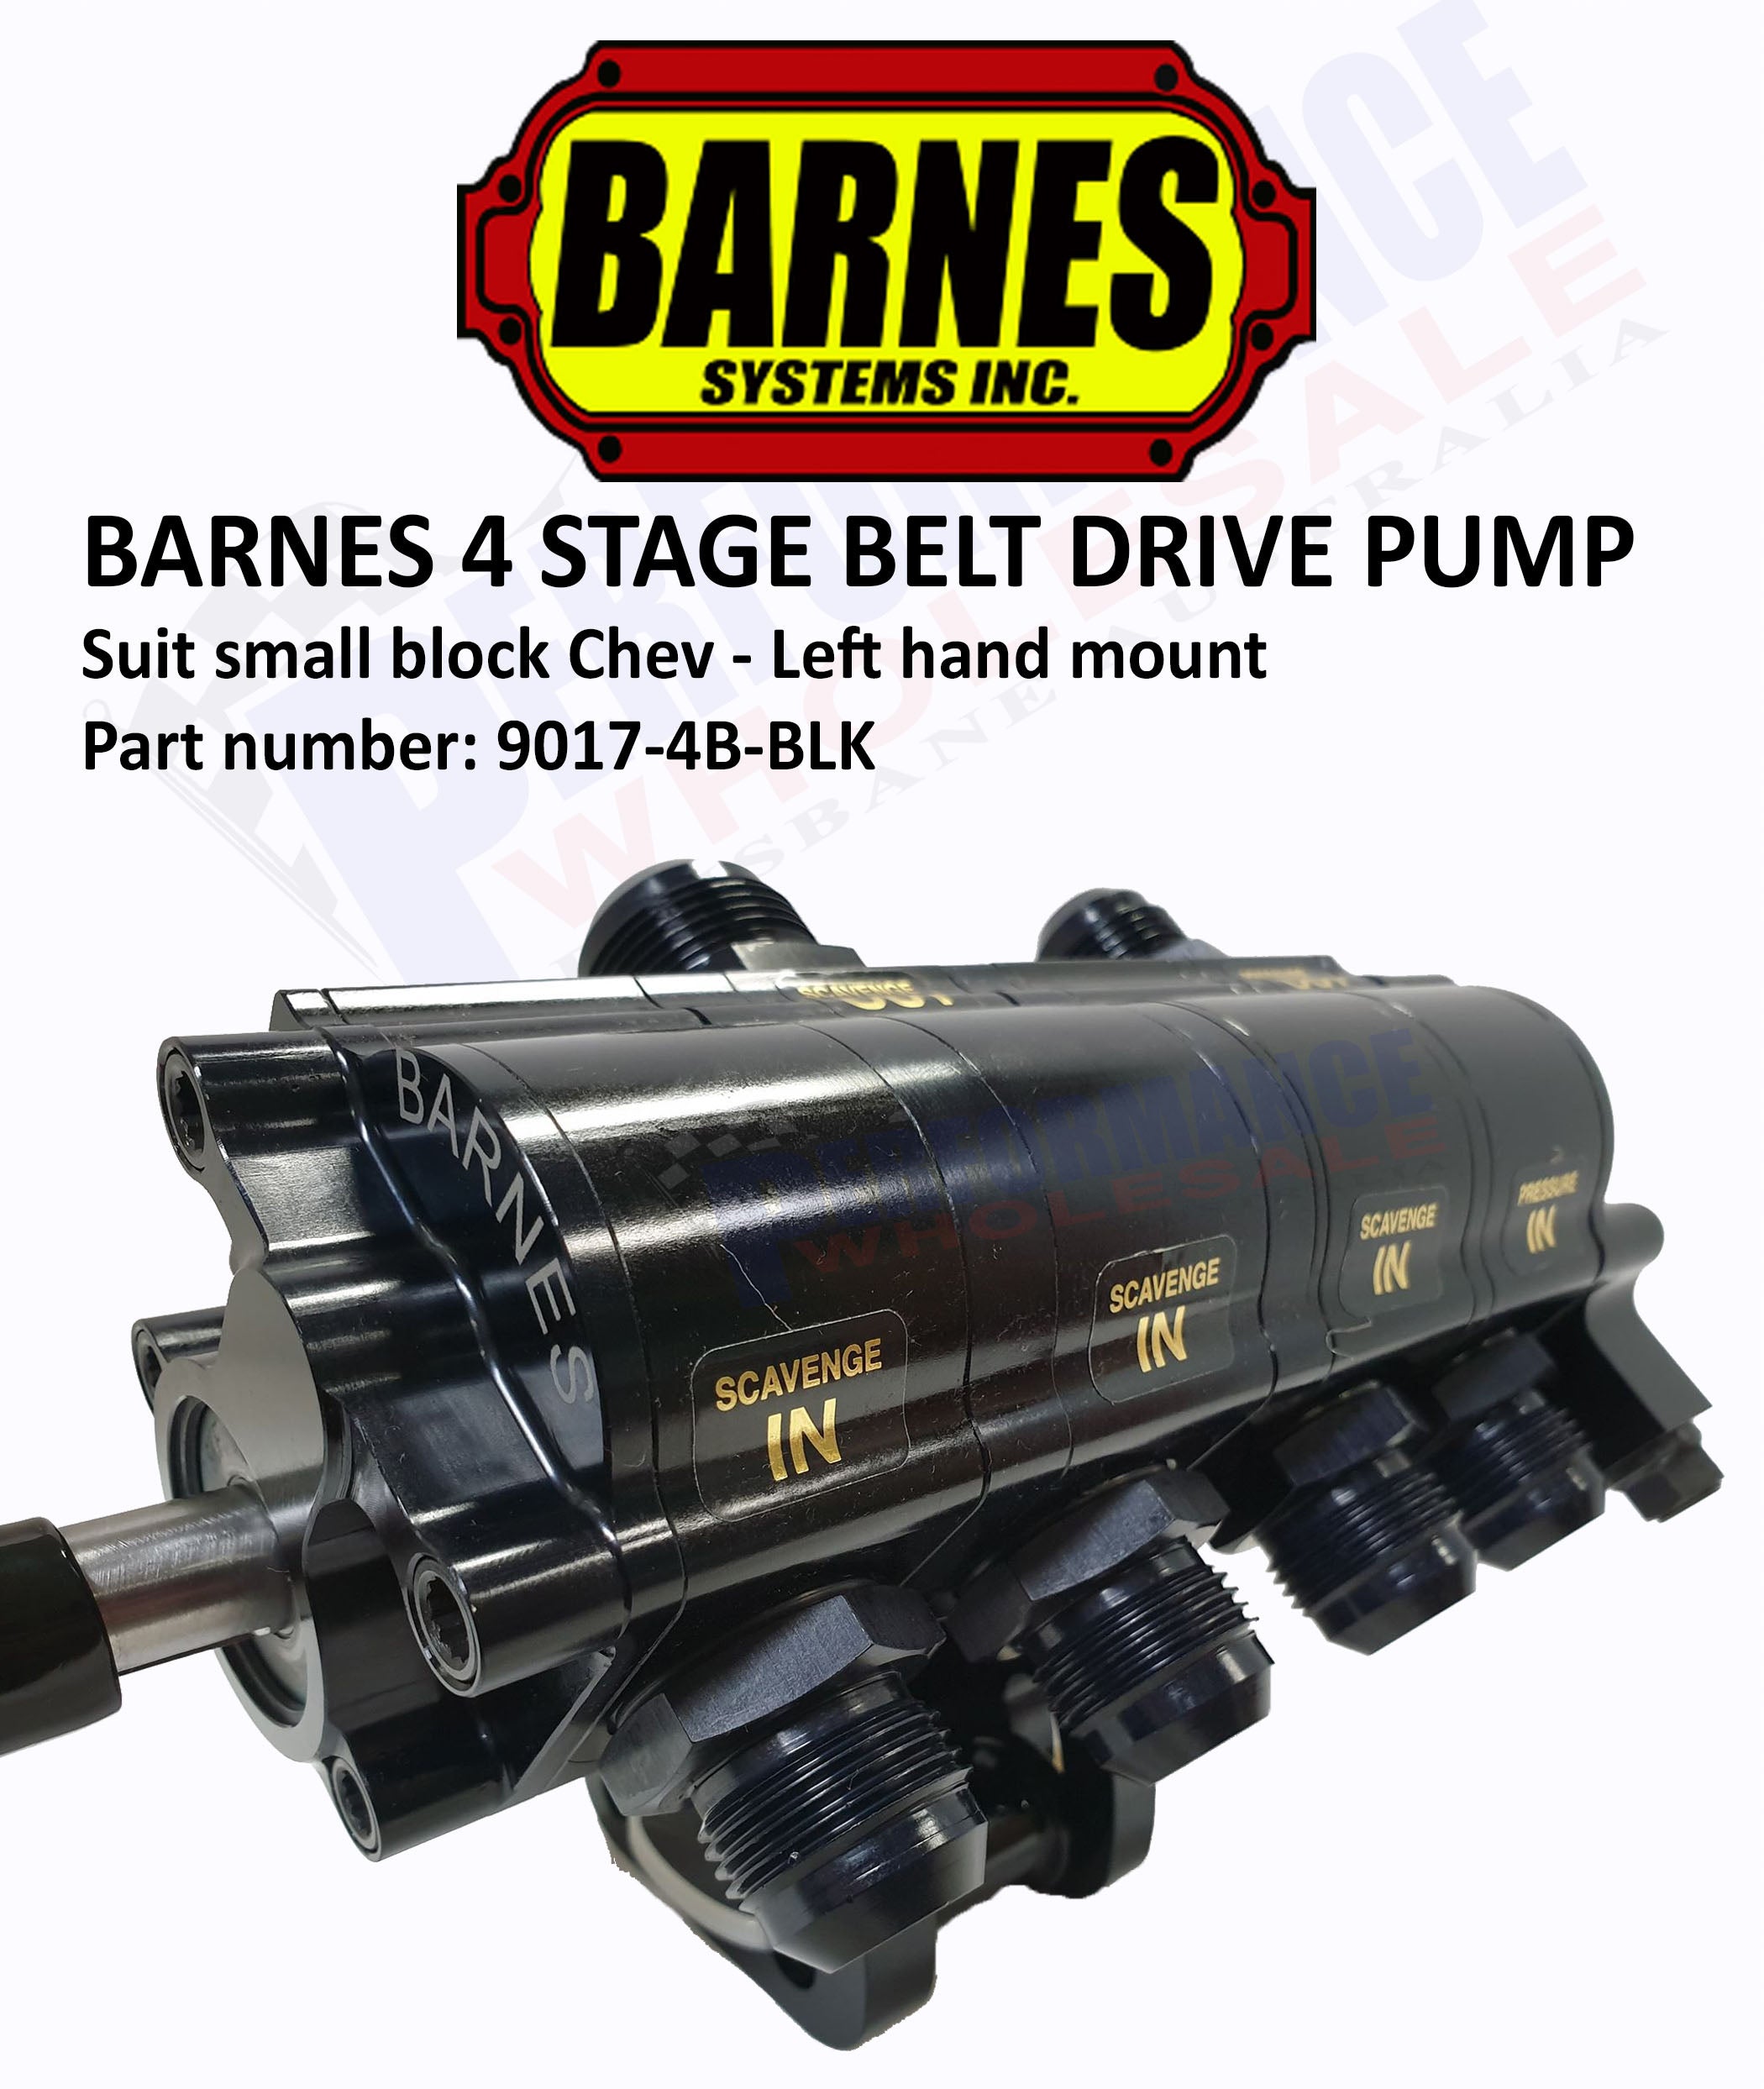 Barnes 4 Stage Belt Drive Dry Sump Pump, SB Chev LH Mount